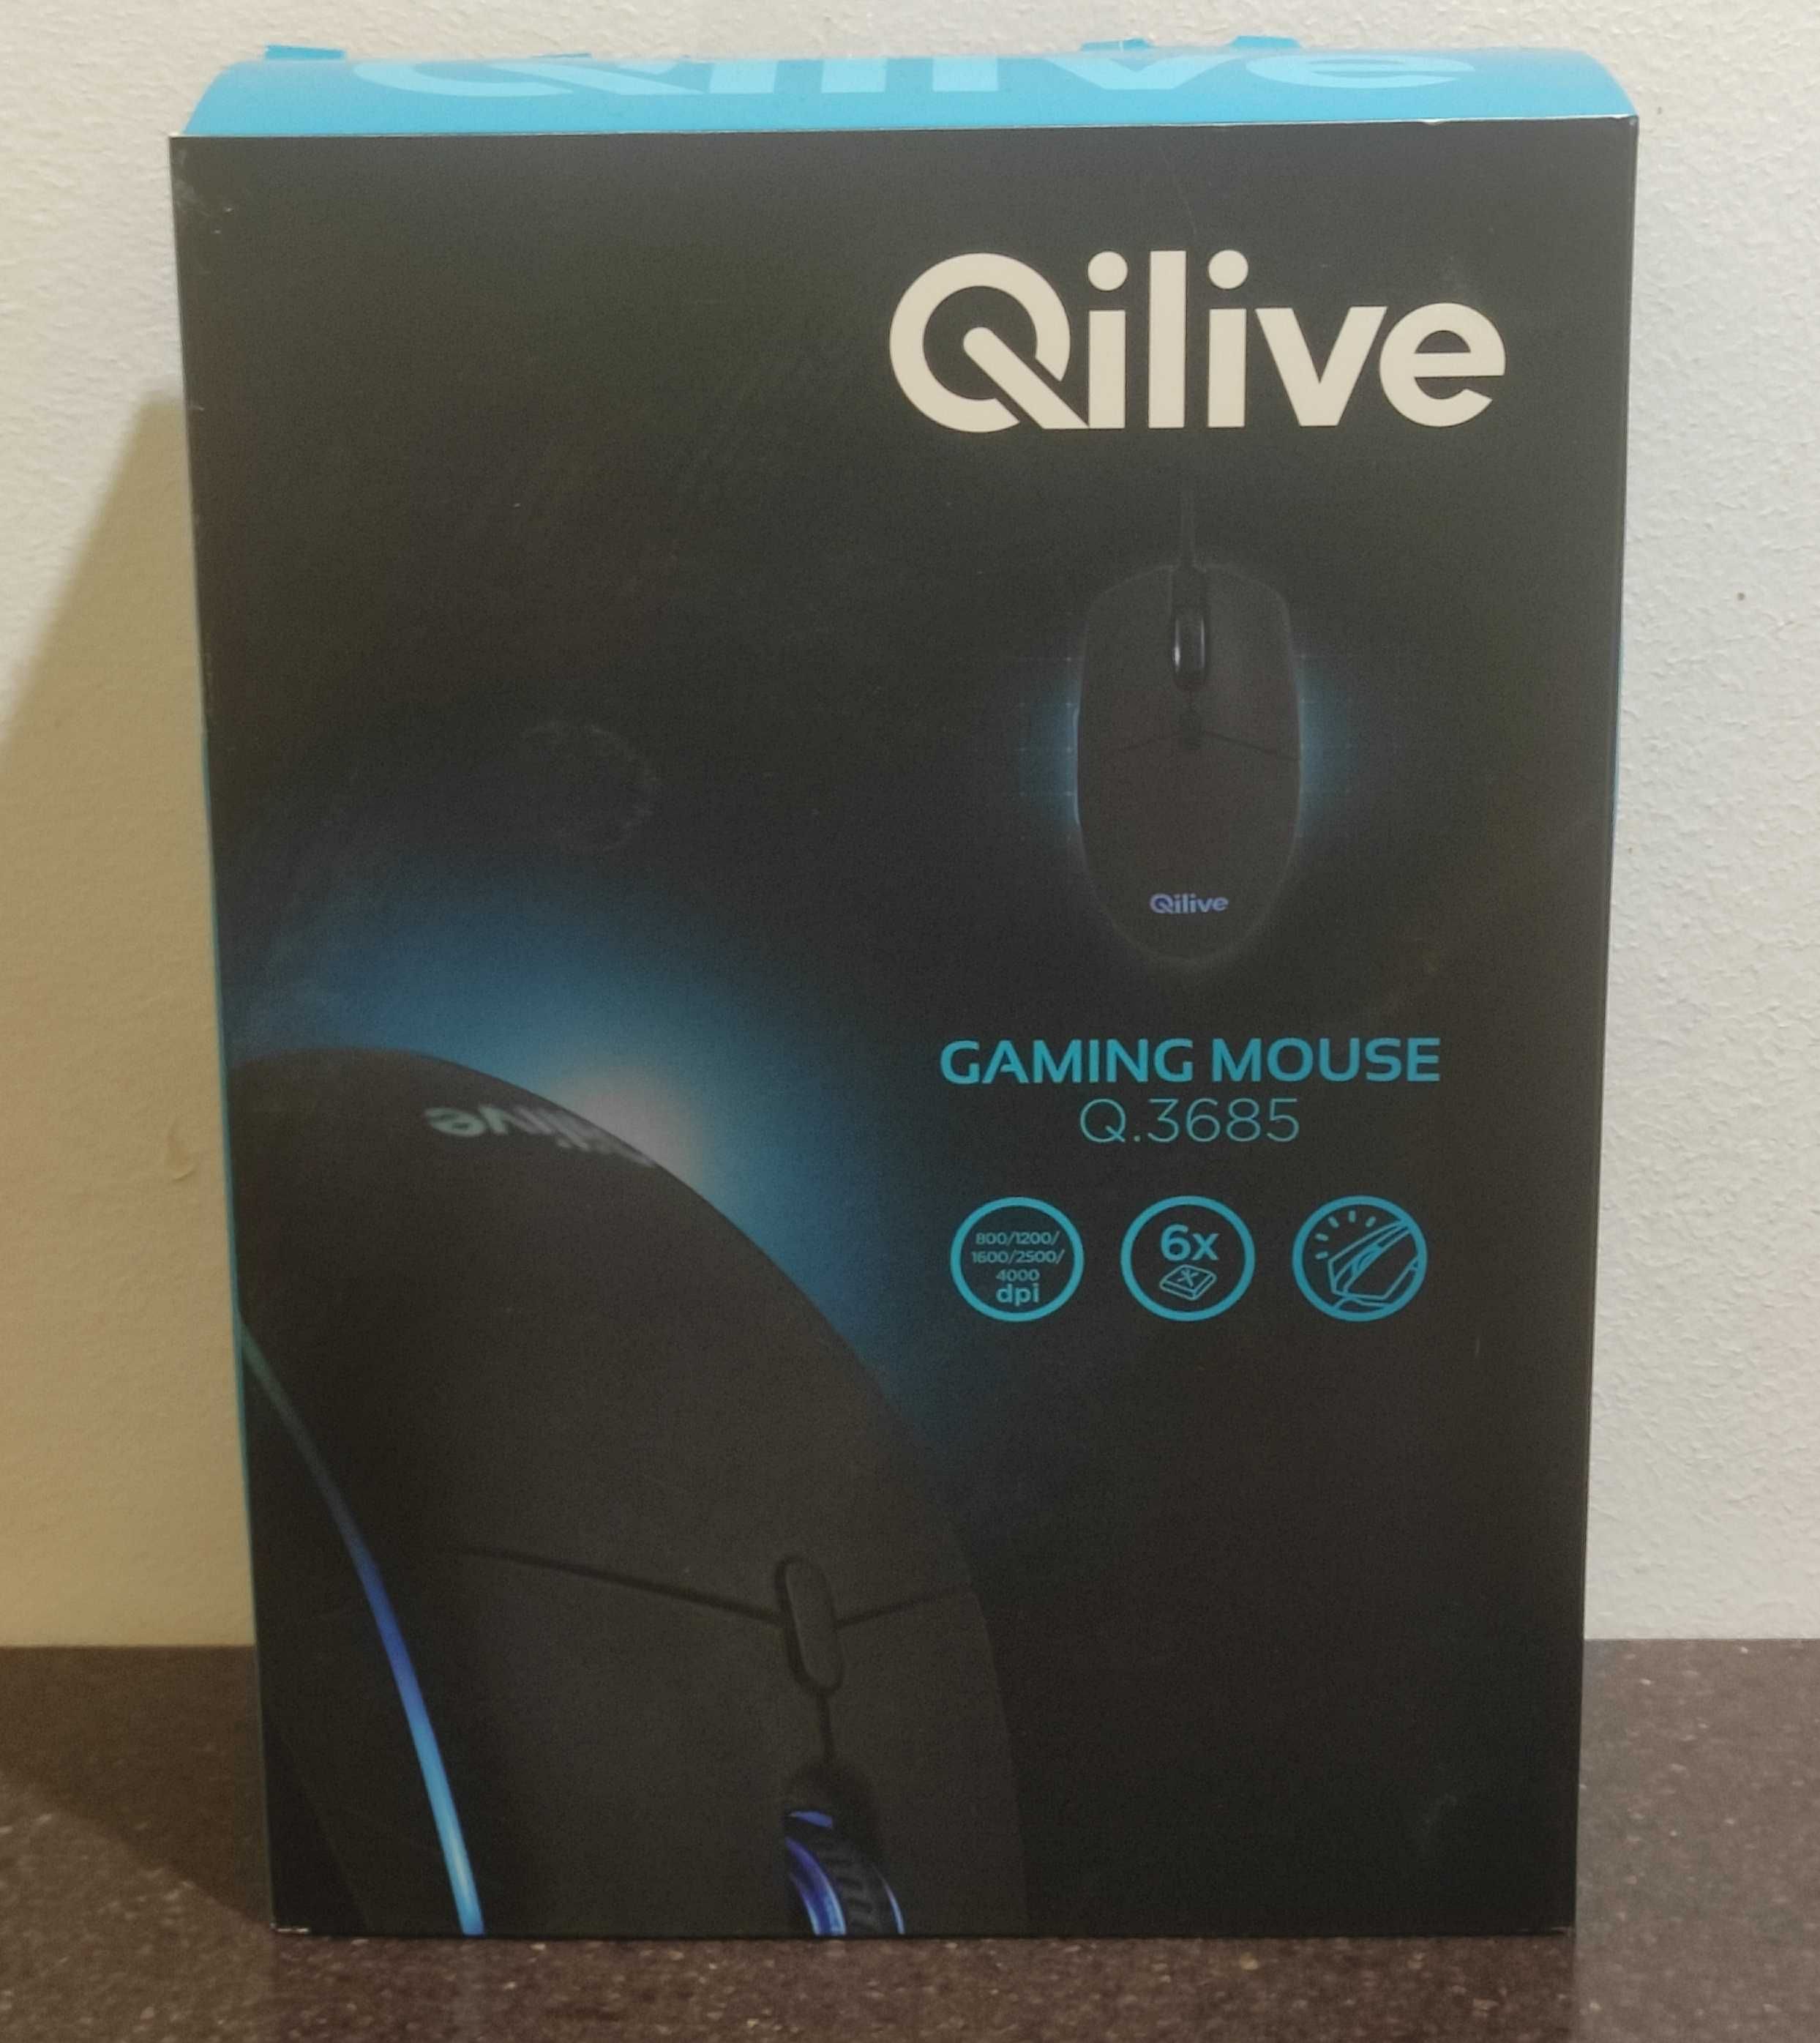 Qilive Gaming Mouse Q.3685 - Myszka komputerowa do grania